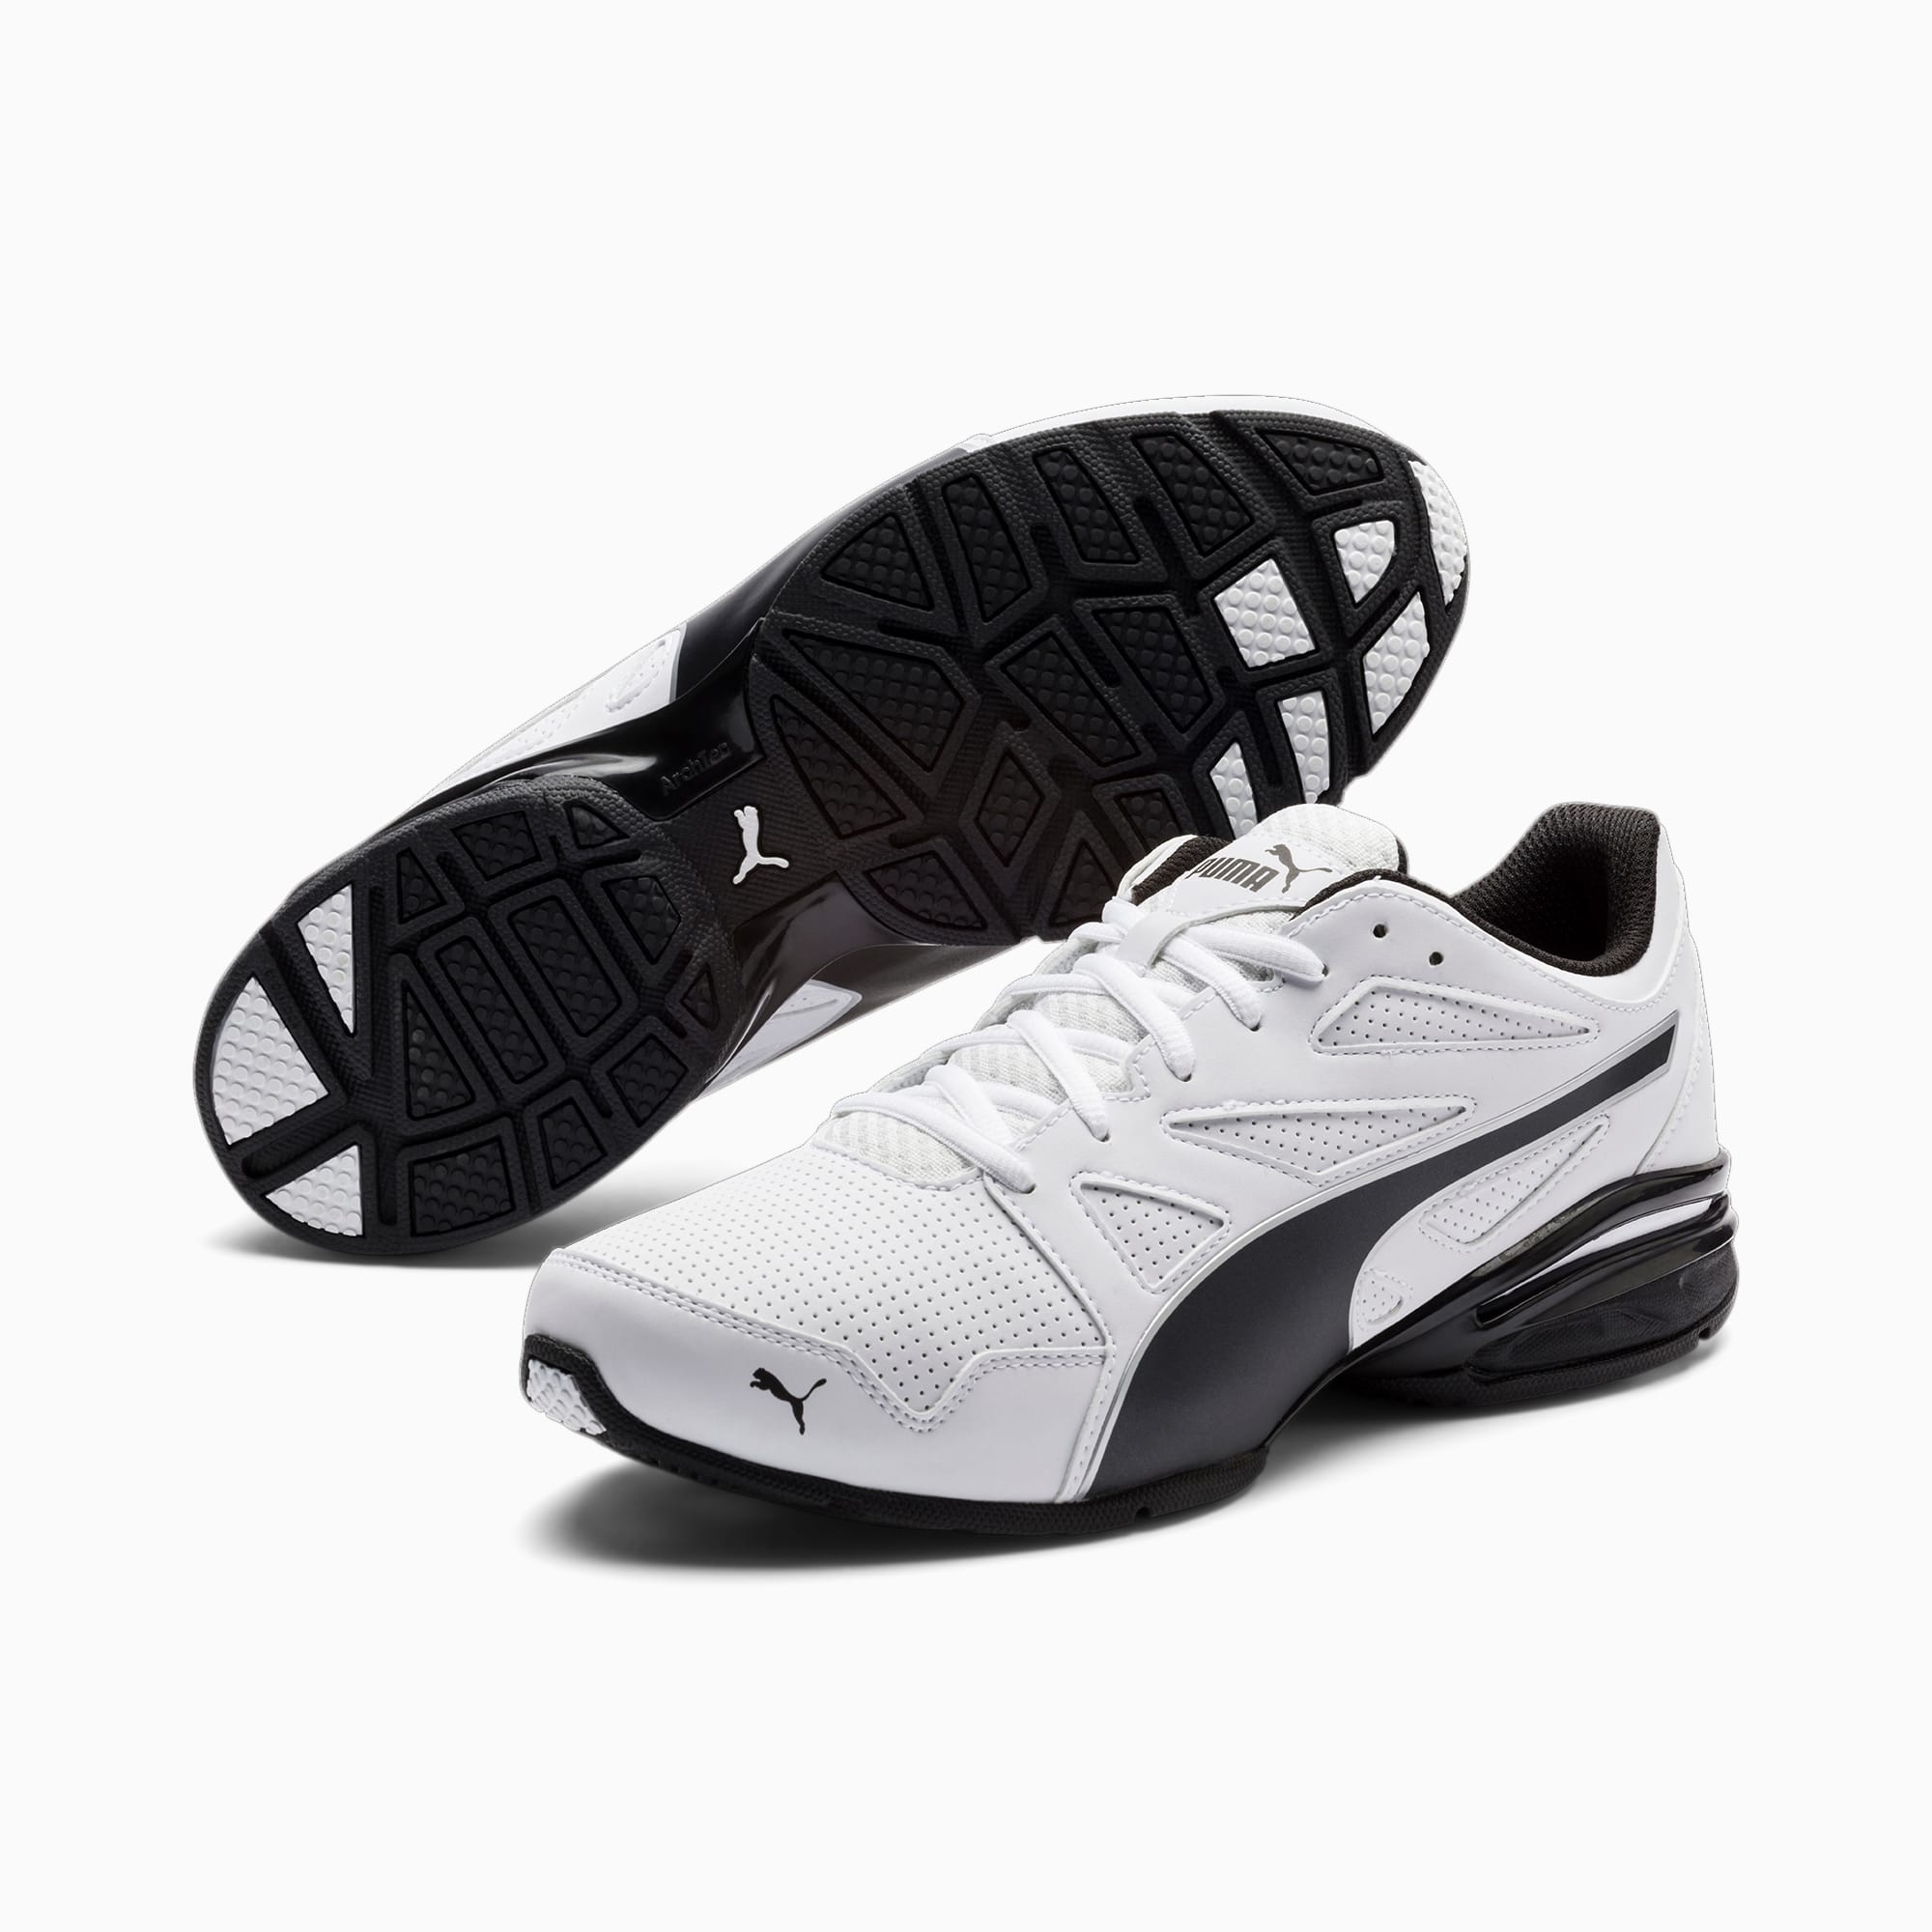 Tazon Modern SL Men's Running Shoes | Puma White-Puma Black | PUMA Новинки  | PUMA